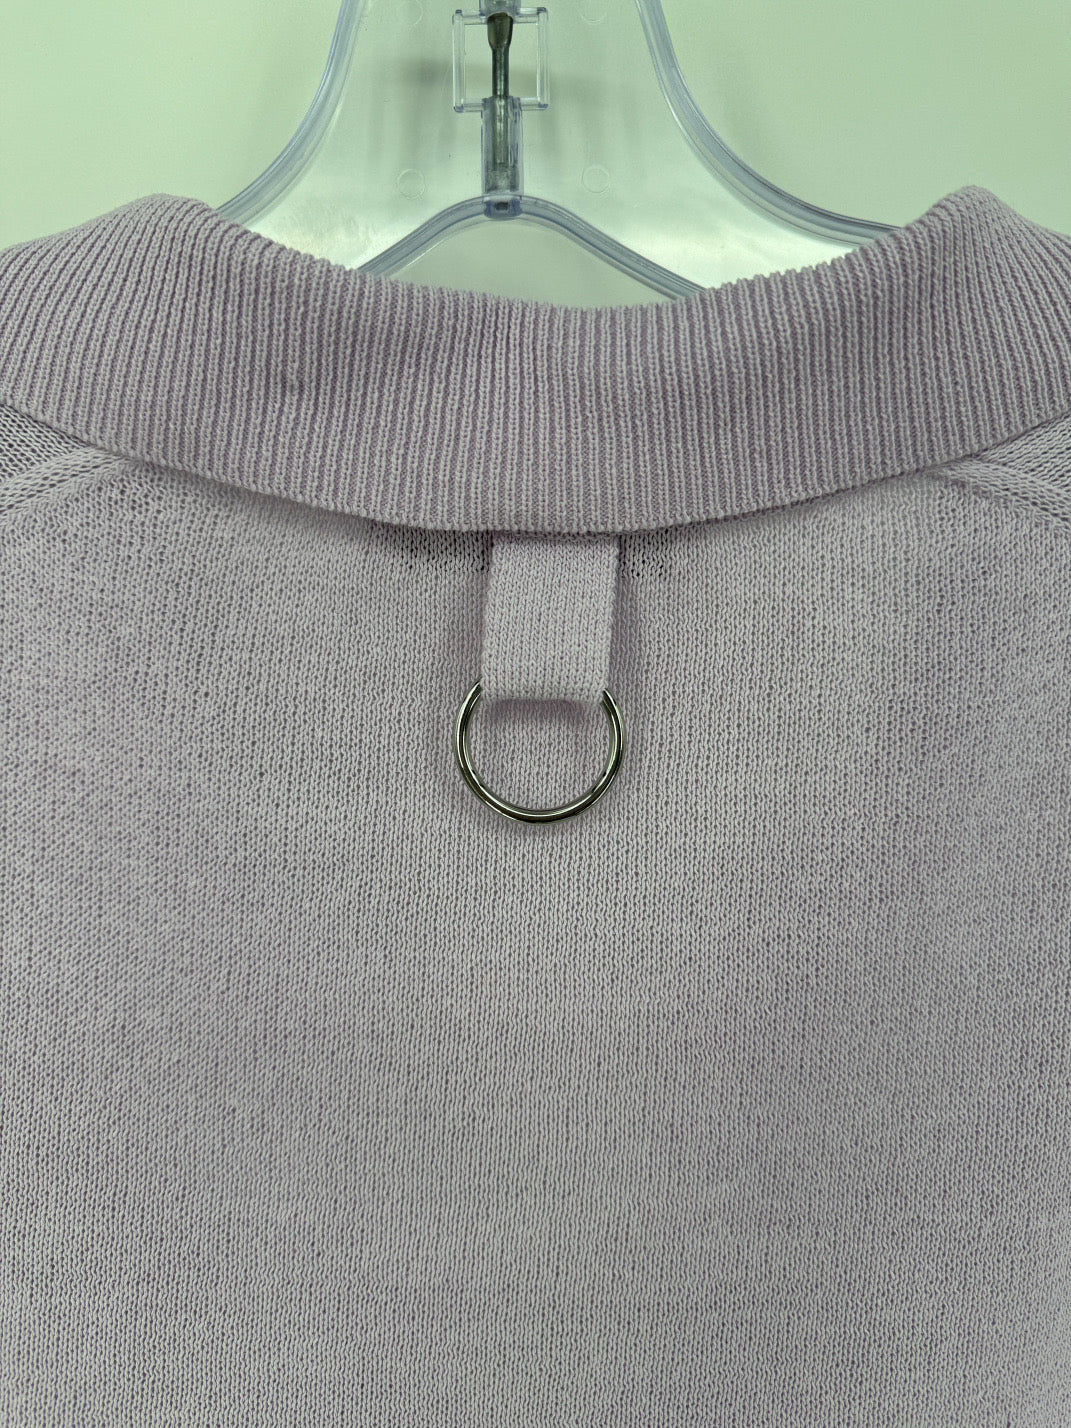 TIBI Size L Lilac Knit Top